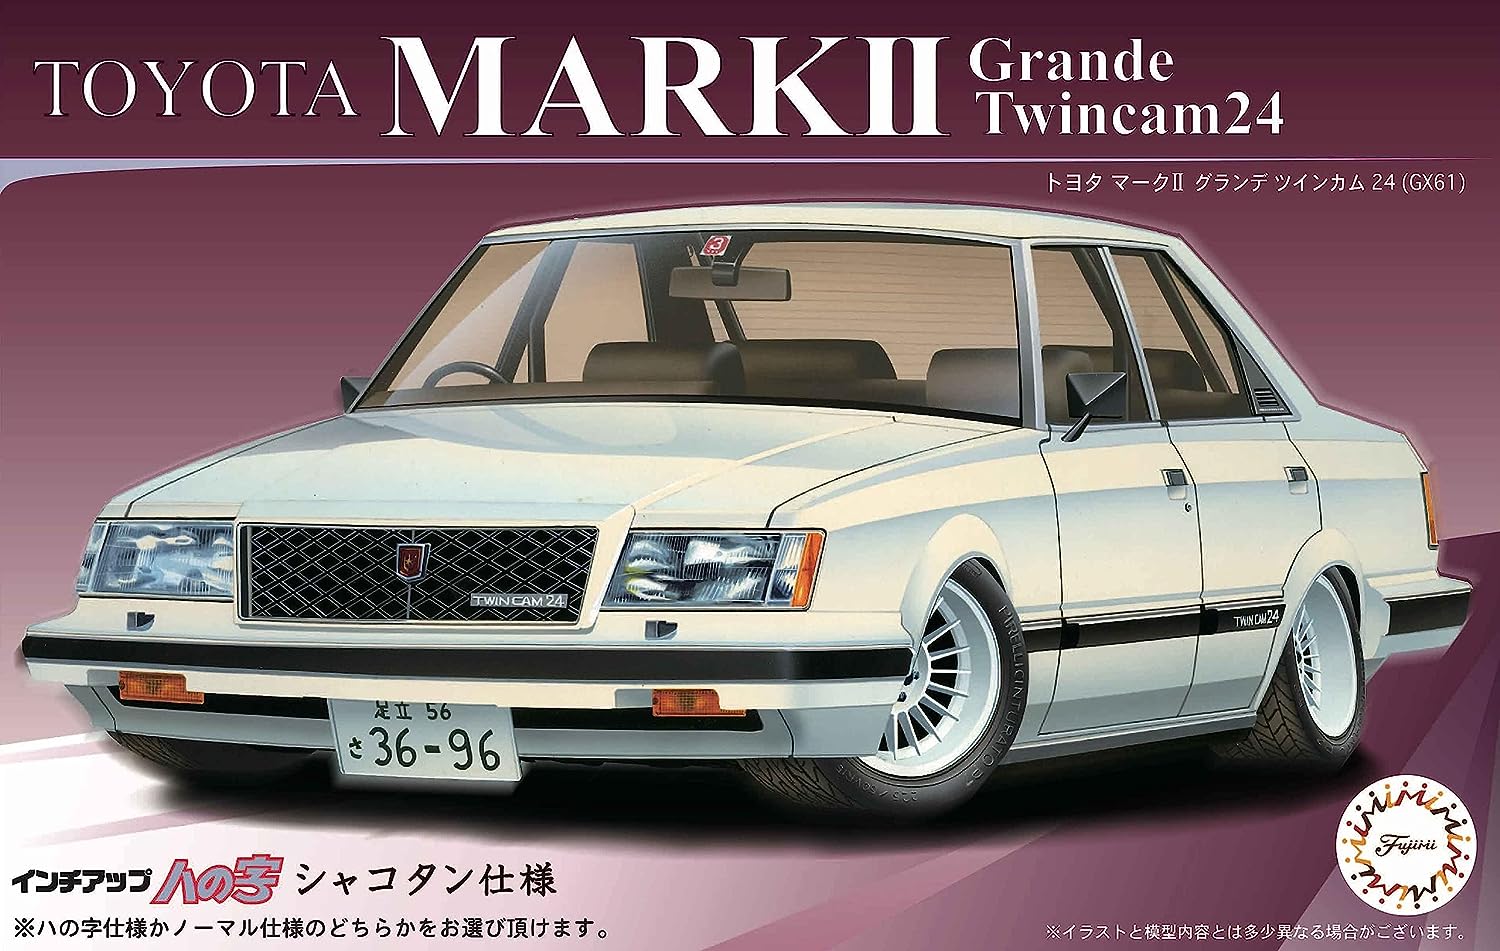 1/24 Inch Up Series No. 128 Toyota Mark II Grande GX61